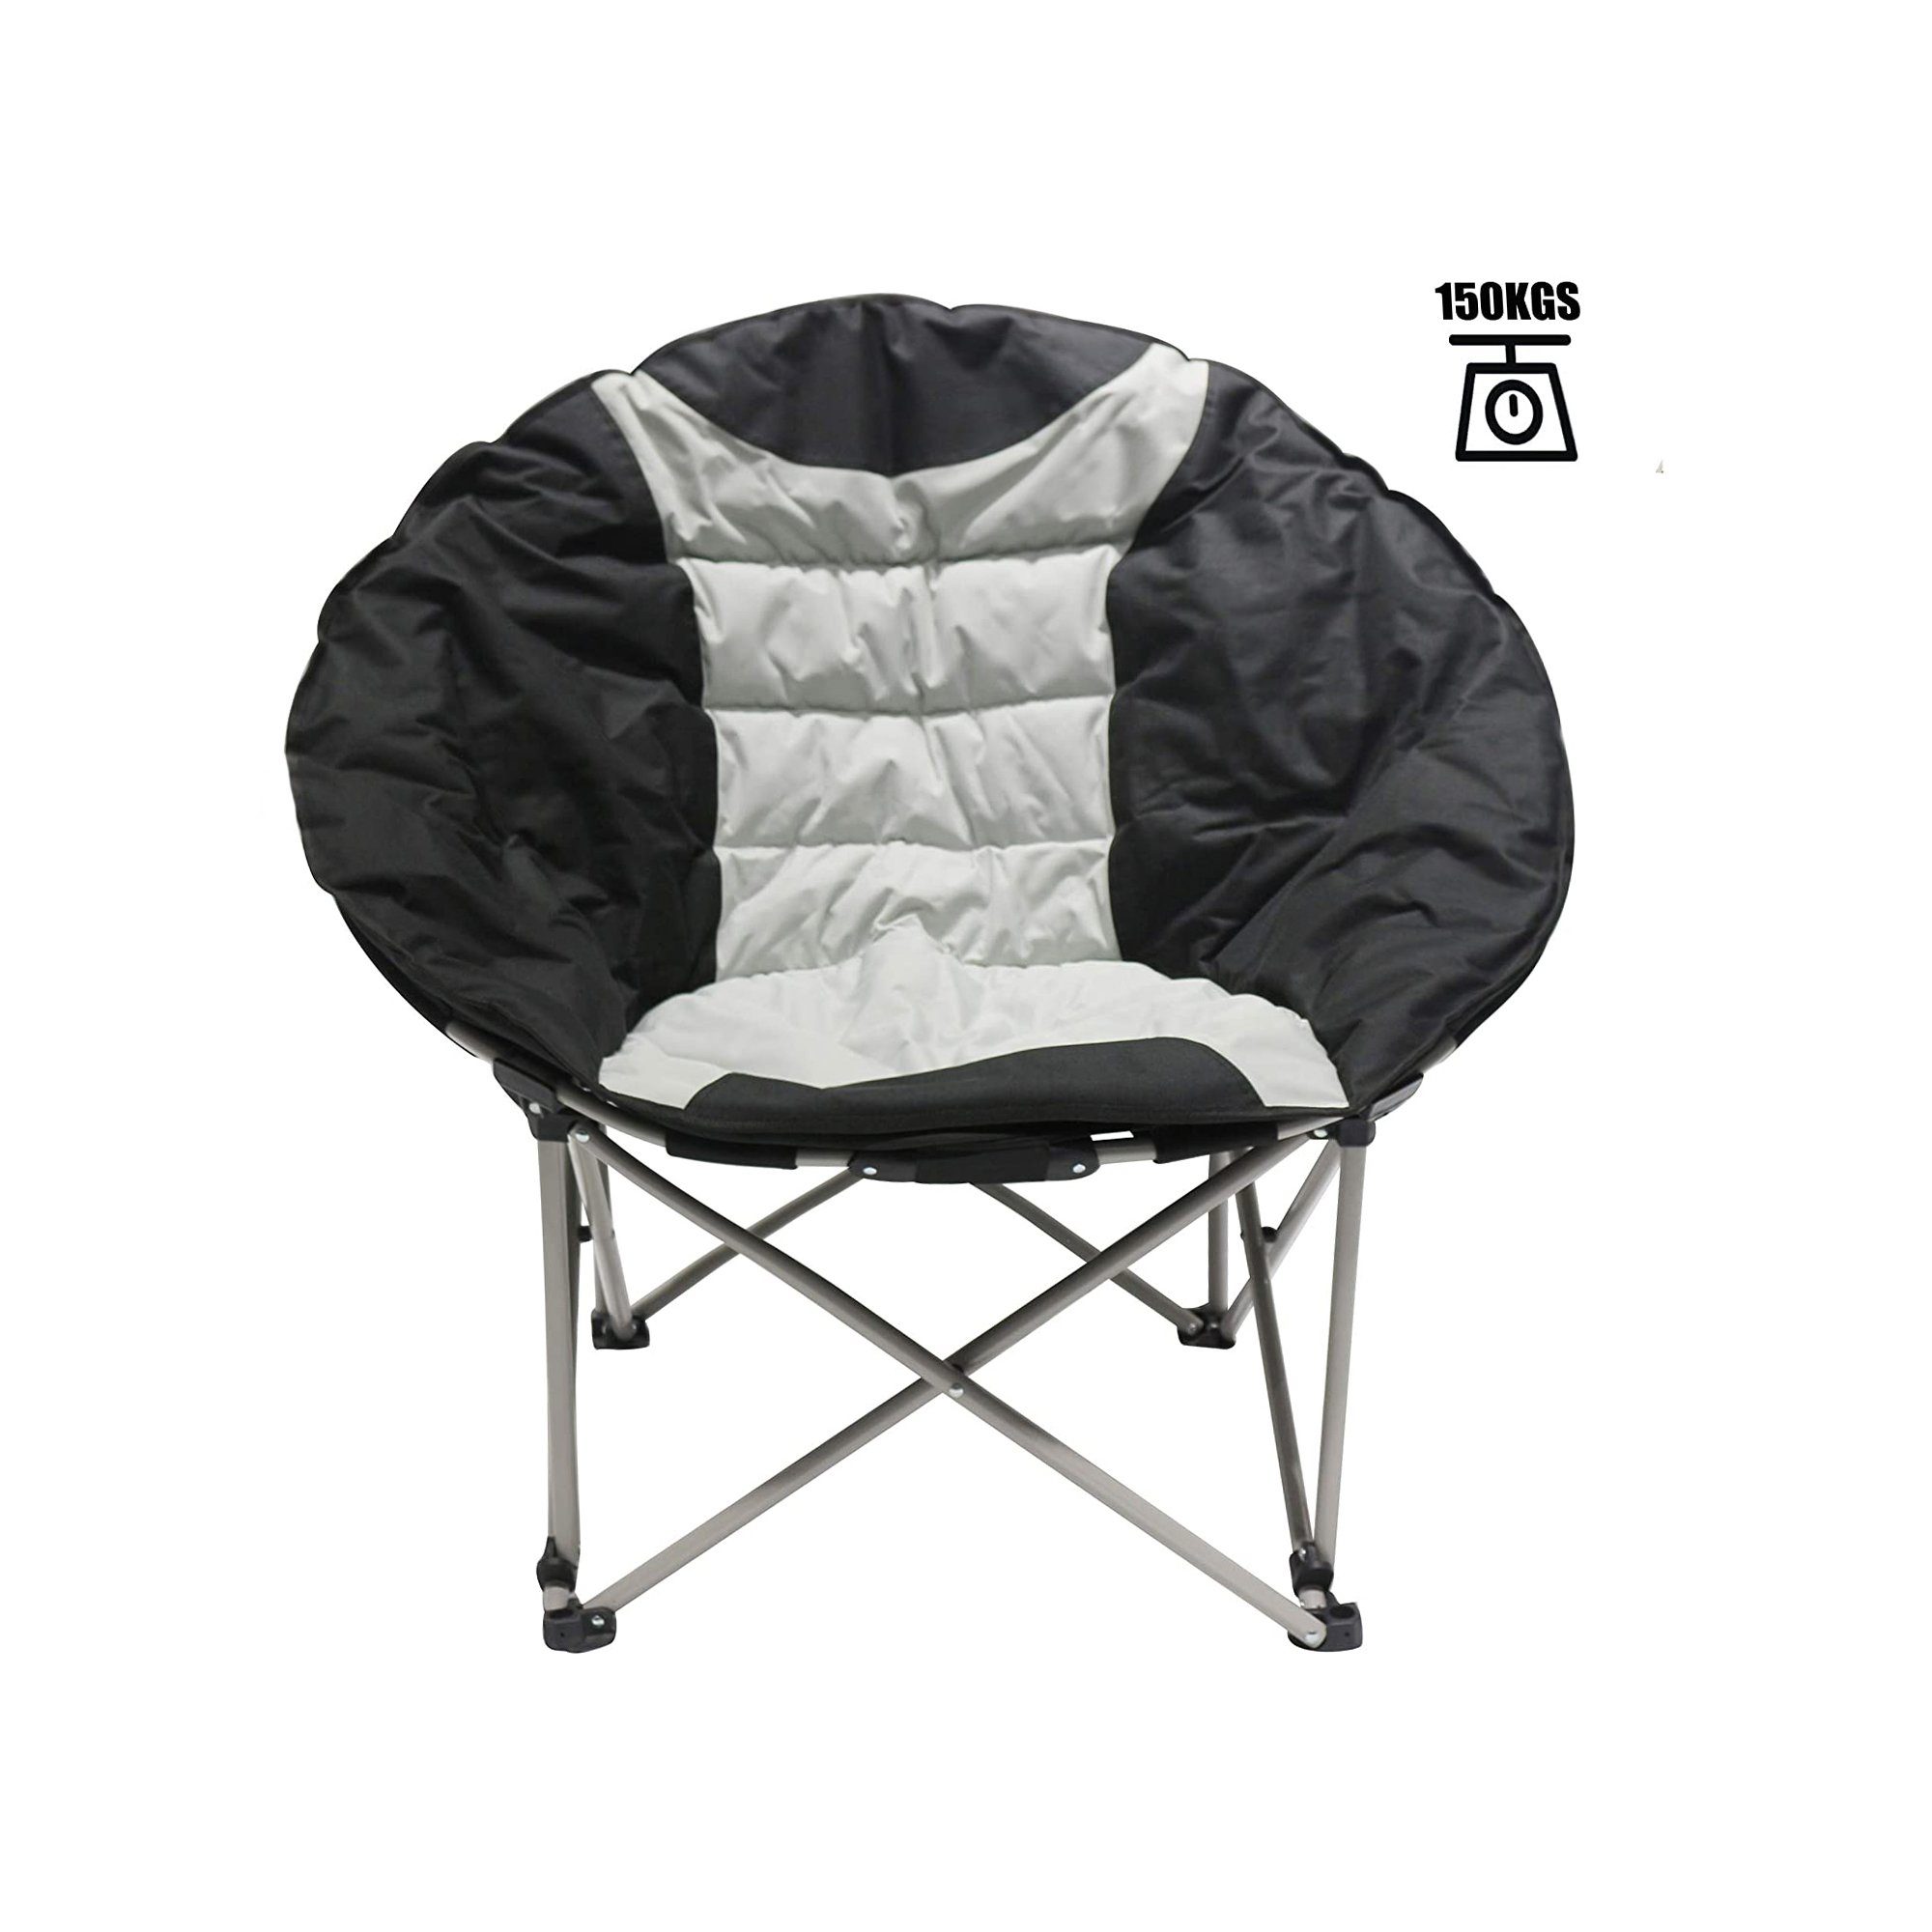 schwarz/cremeweiß Sitzfläche, Campingstuhl Outdoorstuhl Klappstuhl Mond-Stuhl, breiter Faltsessel extra bis Groß Gartenstuhl HOMECALL 150KG